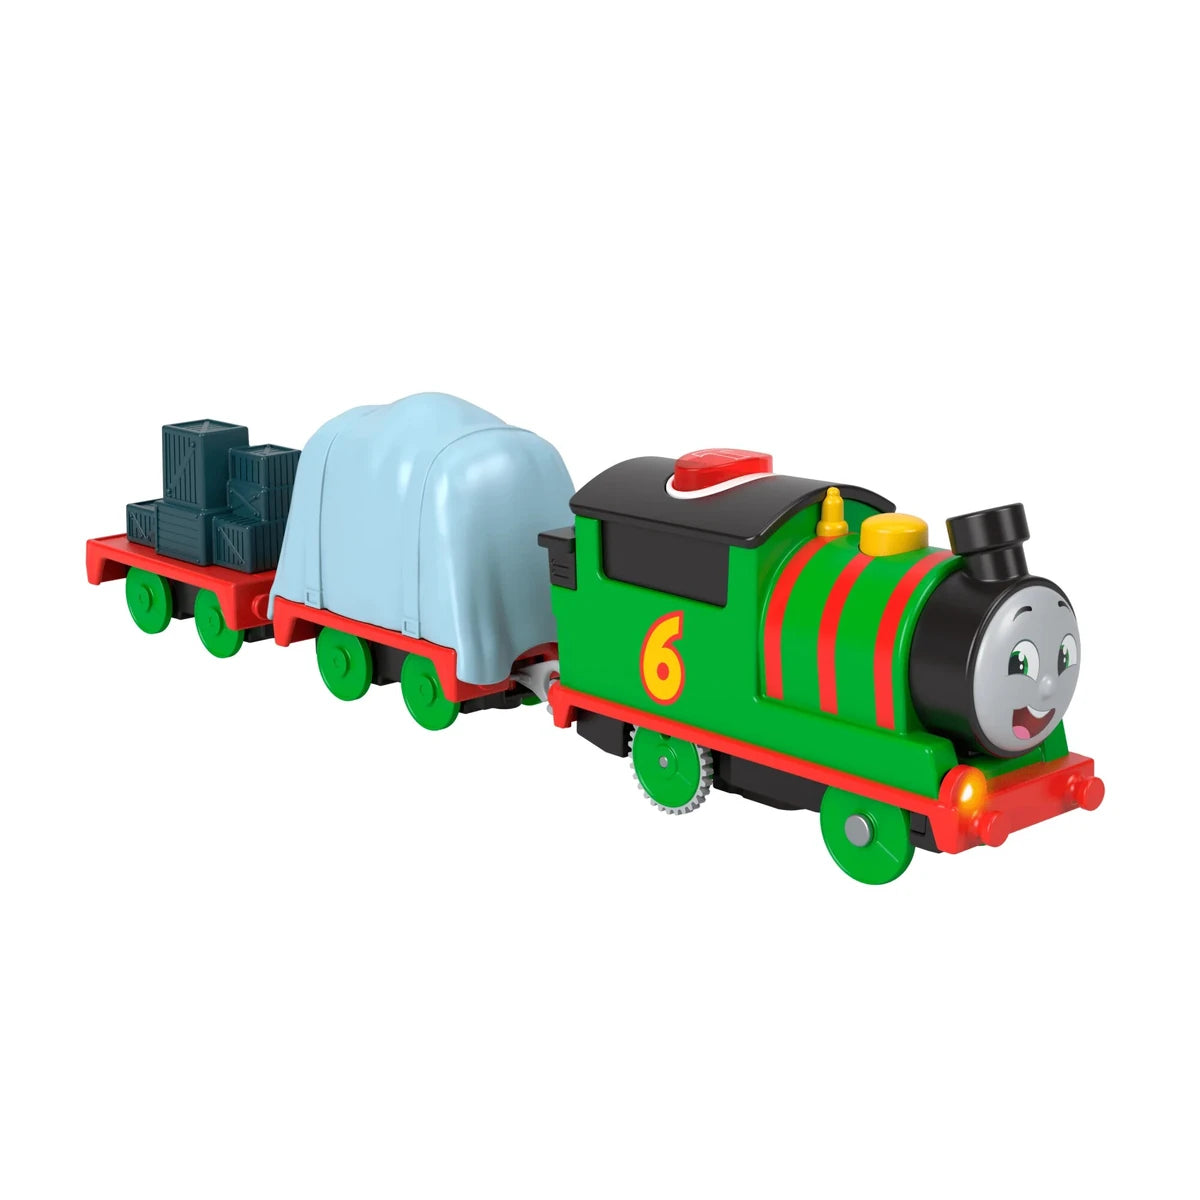 Thomas & Friends Motorized Talking Percy